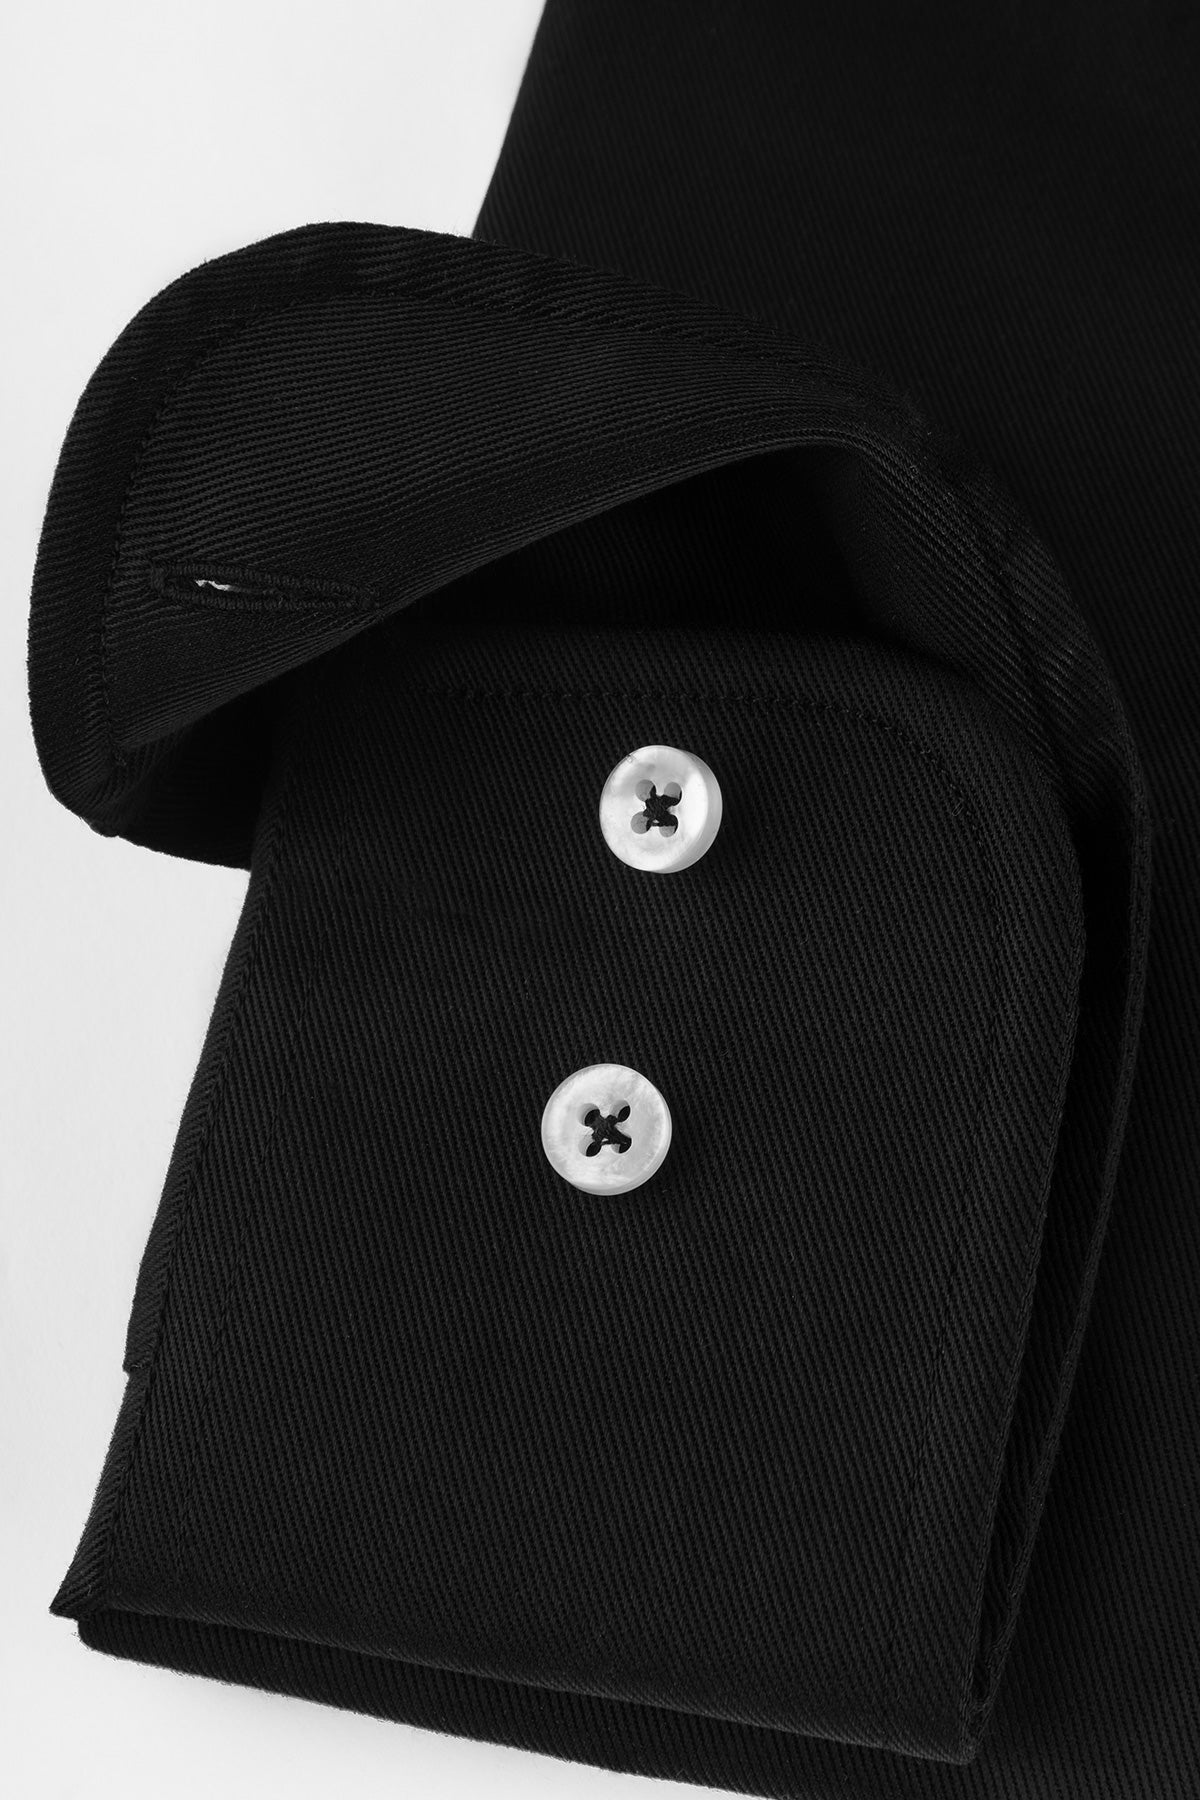 Black button down tencel slim fit shirt